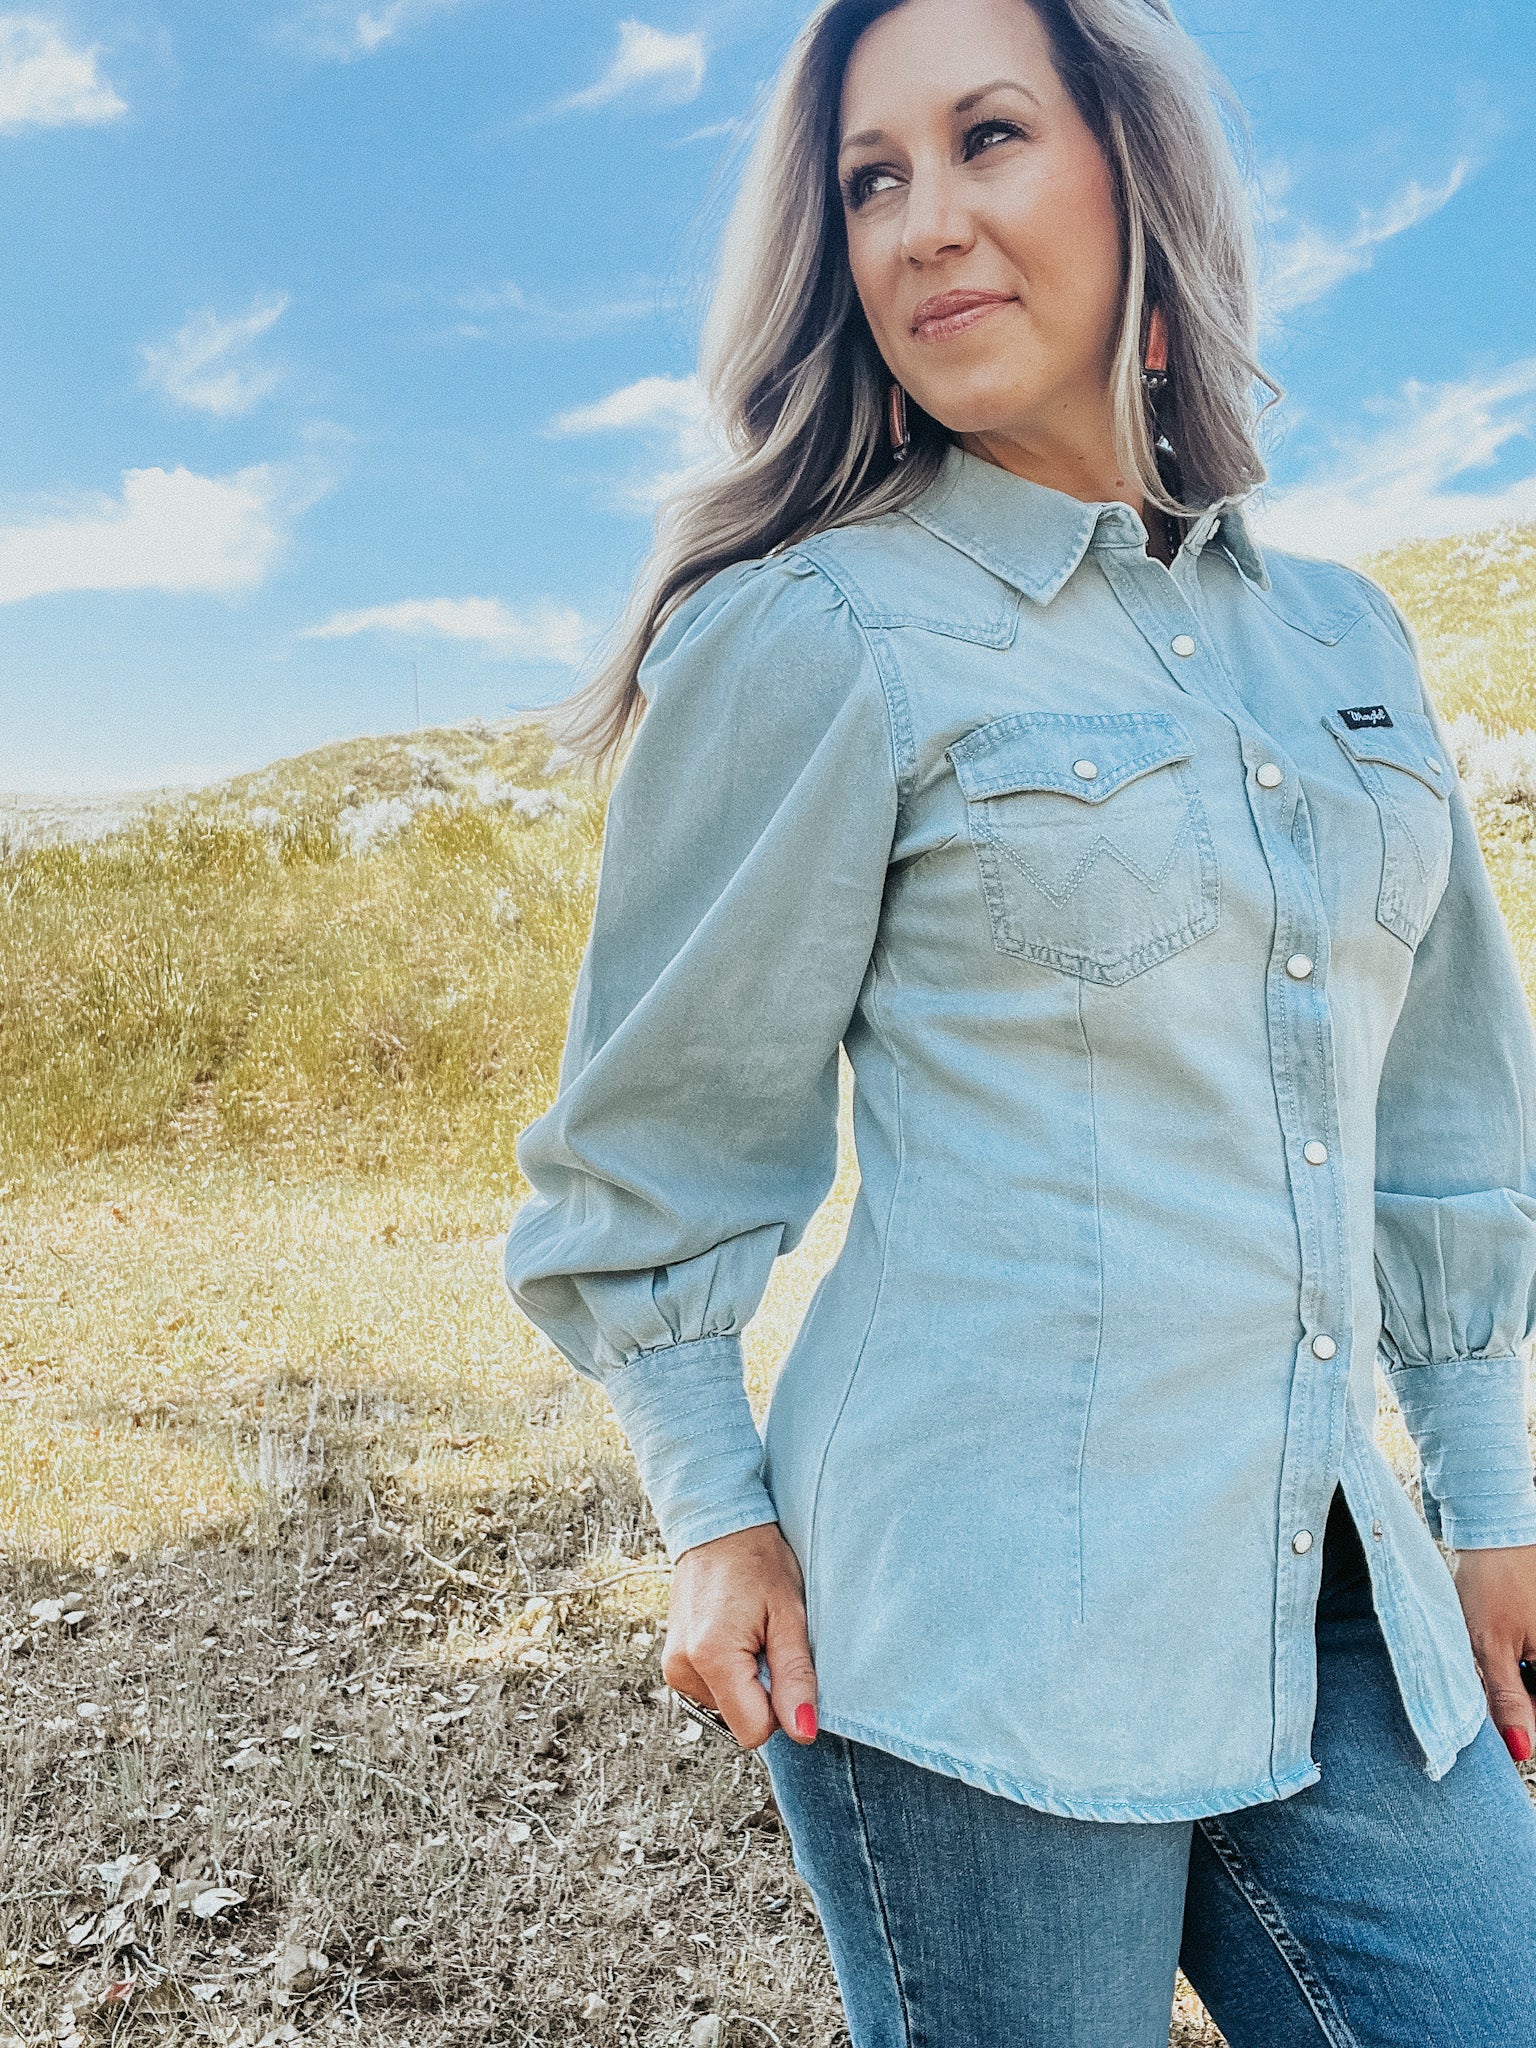 Wrangler Women's Long Sleeve Western Snap Denim Shirt - L - Blue